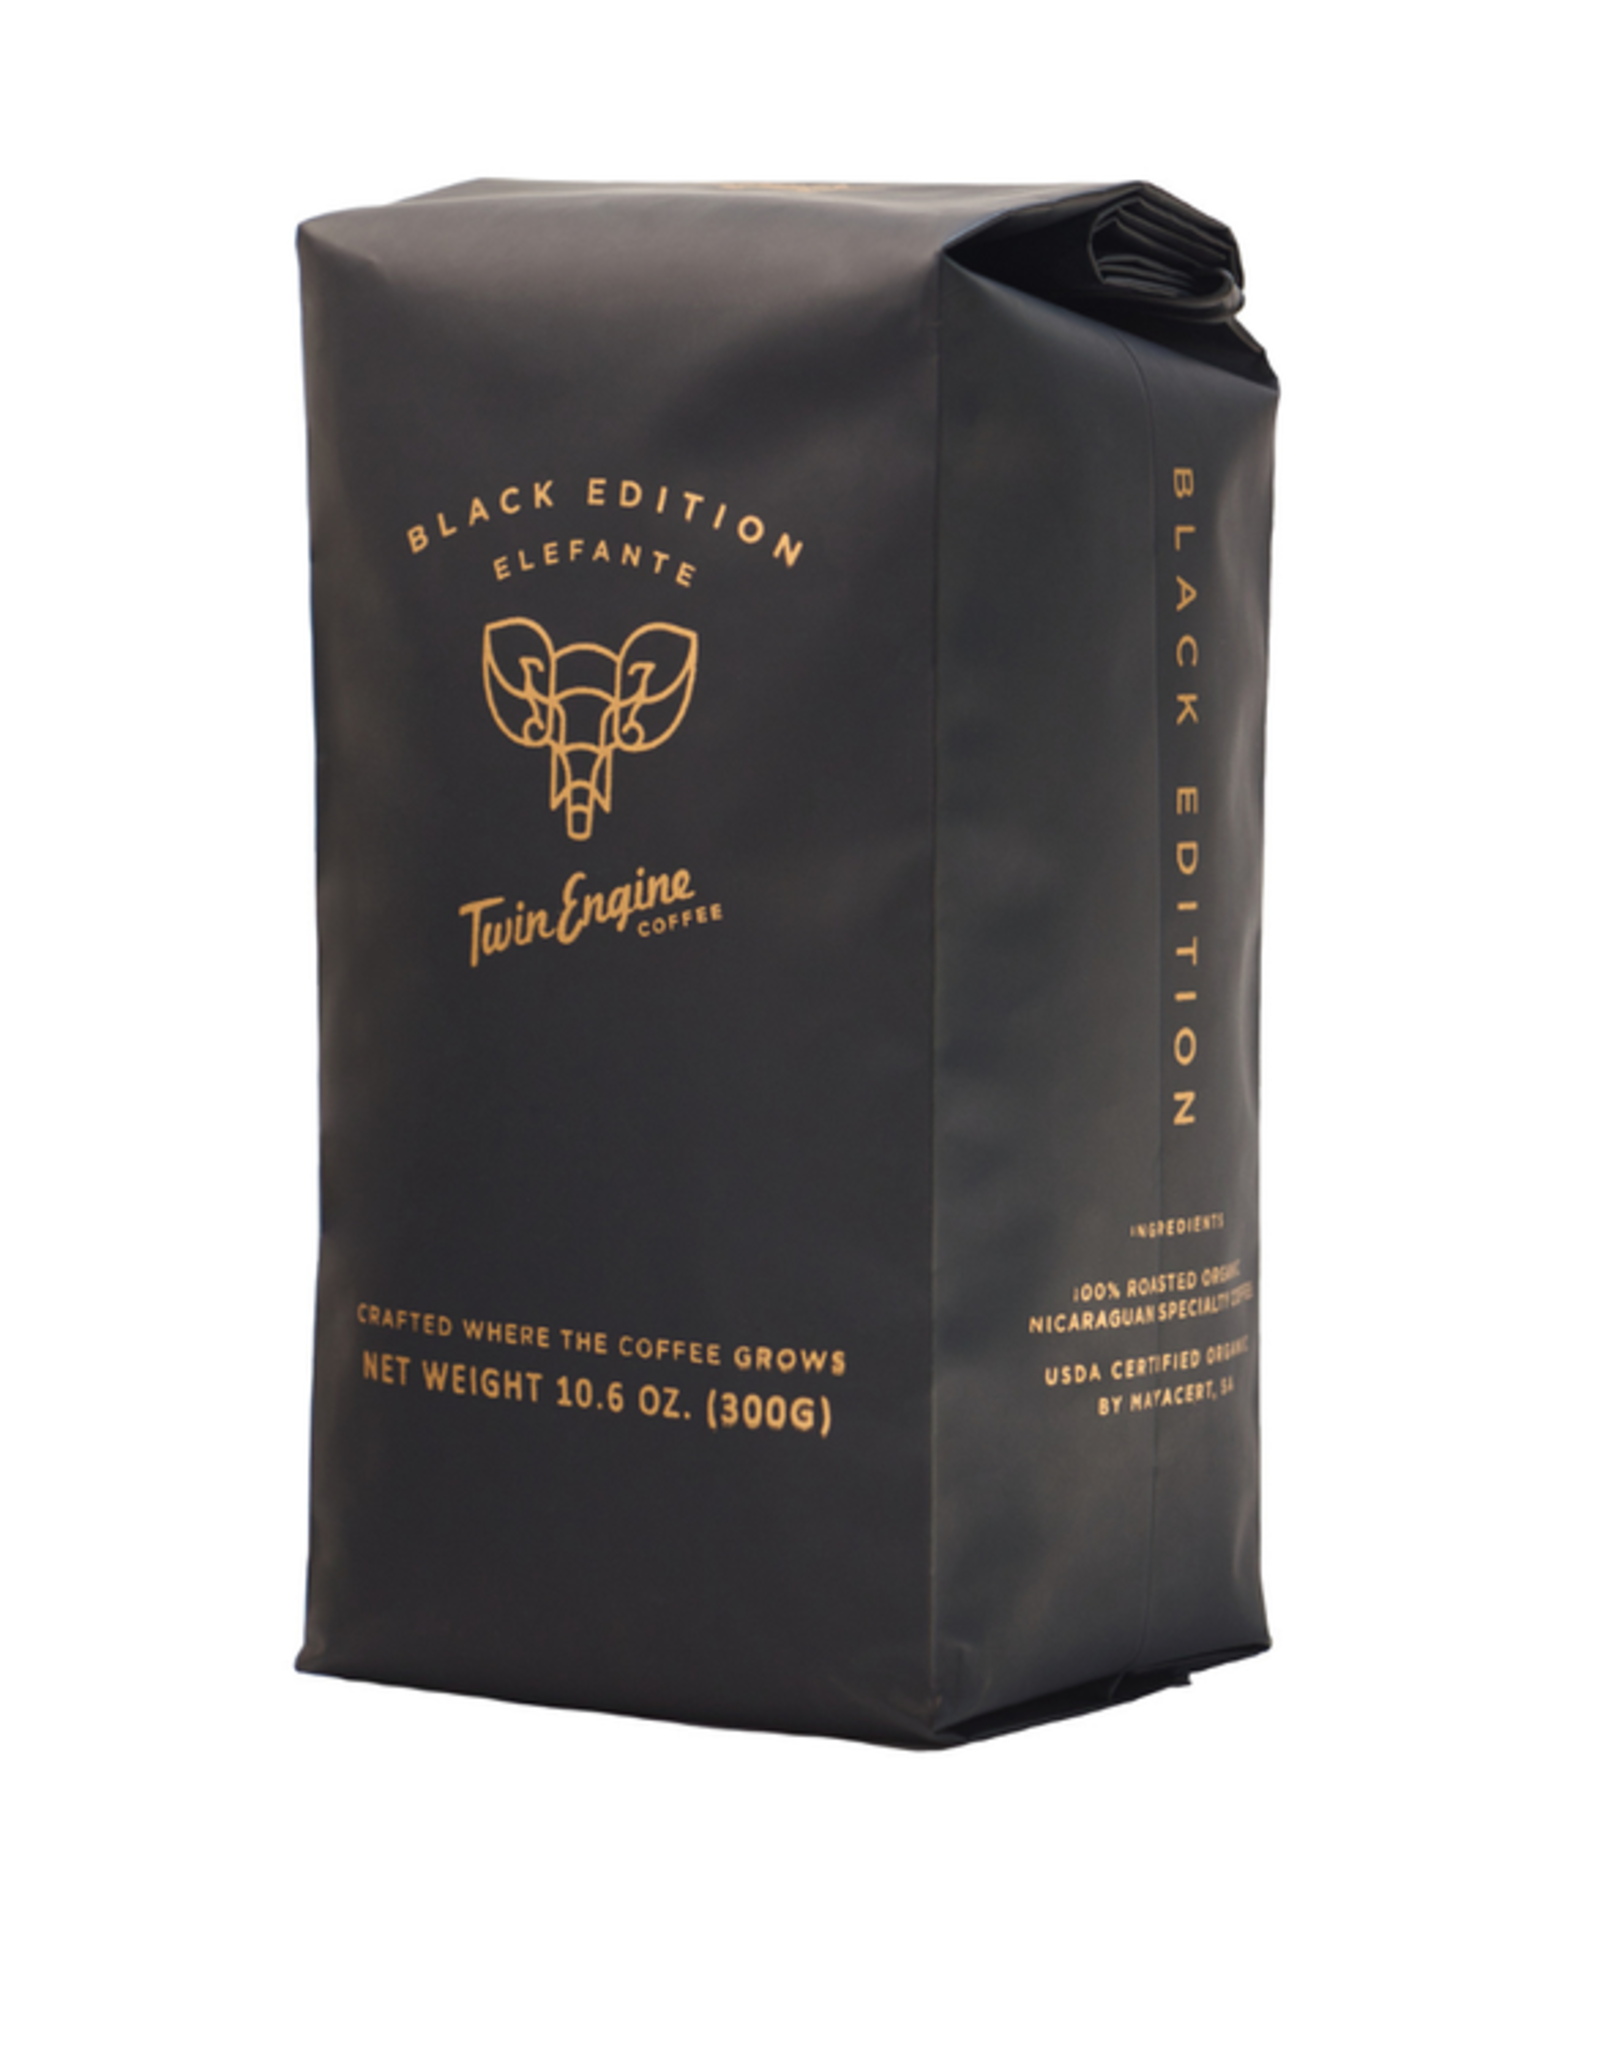 Twin Engine Elefante Reserve Coffee - Black Edition